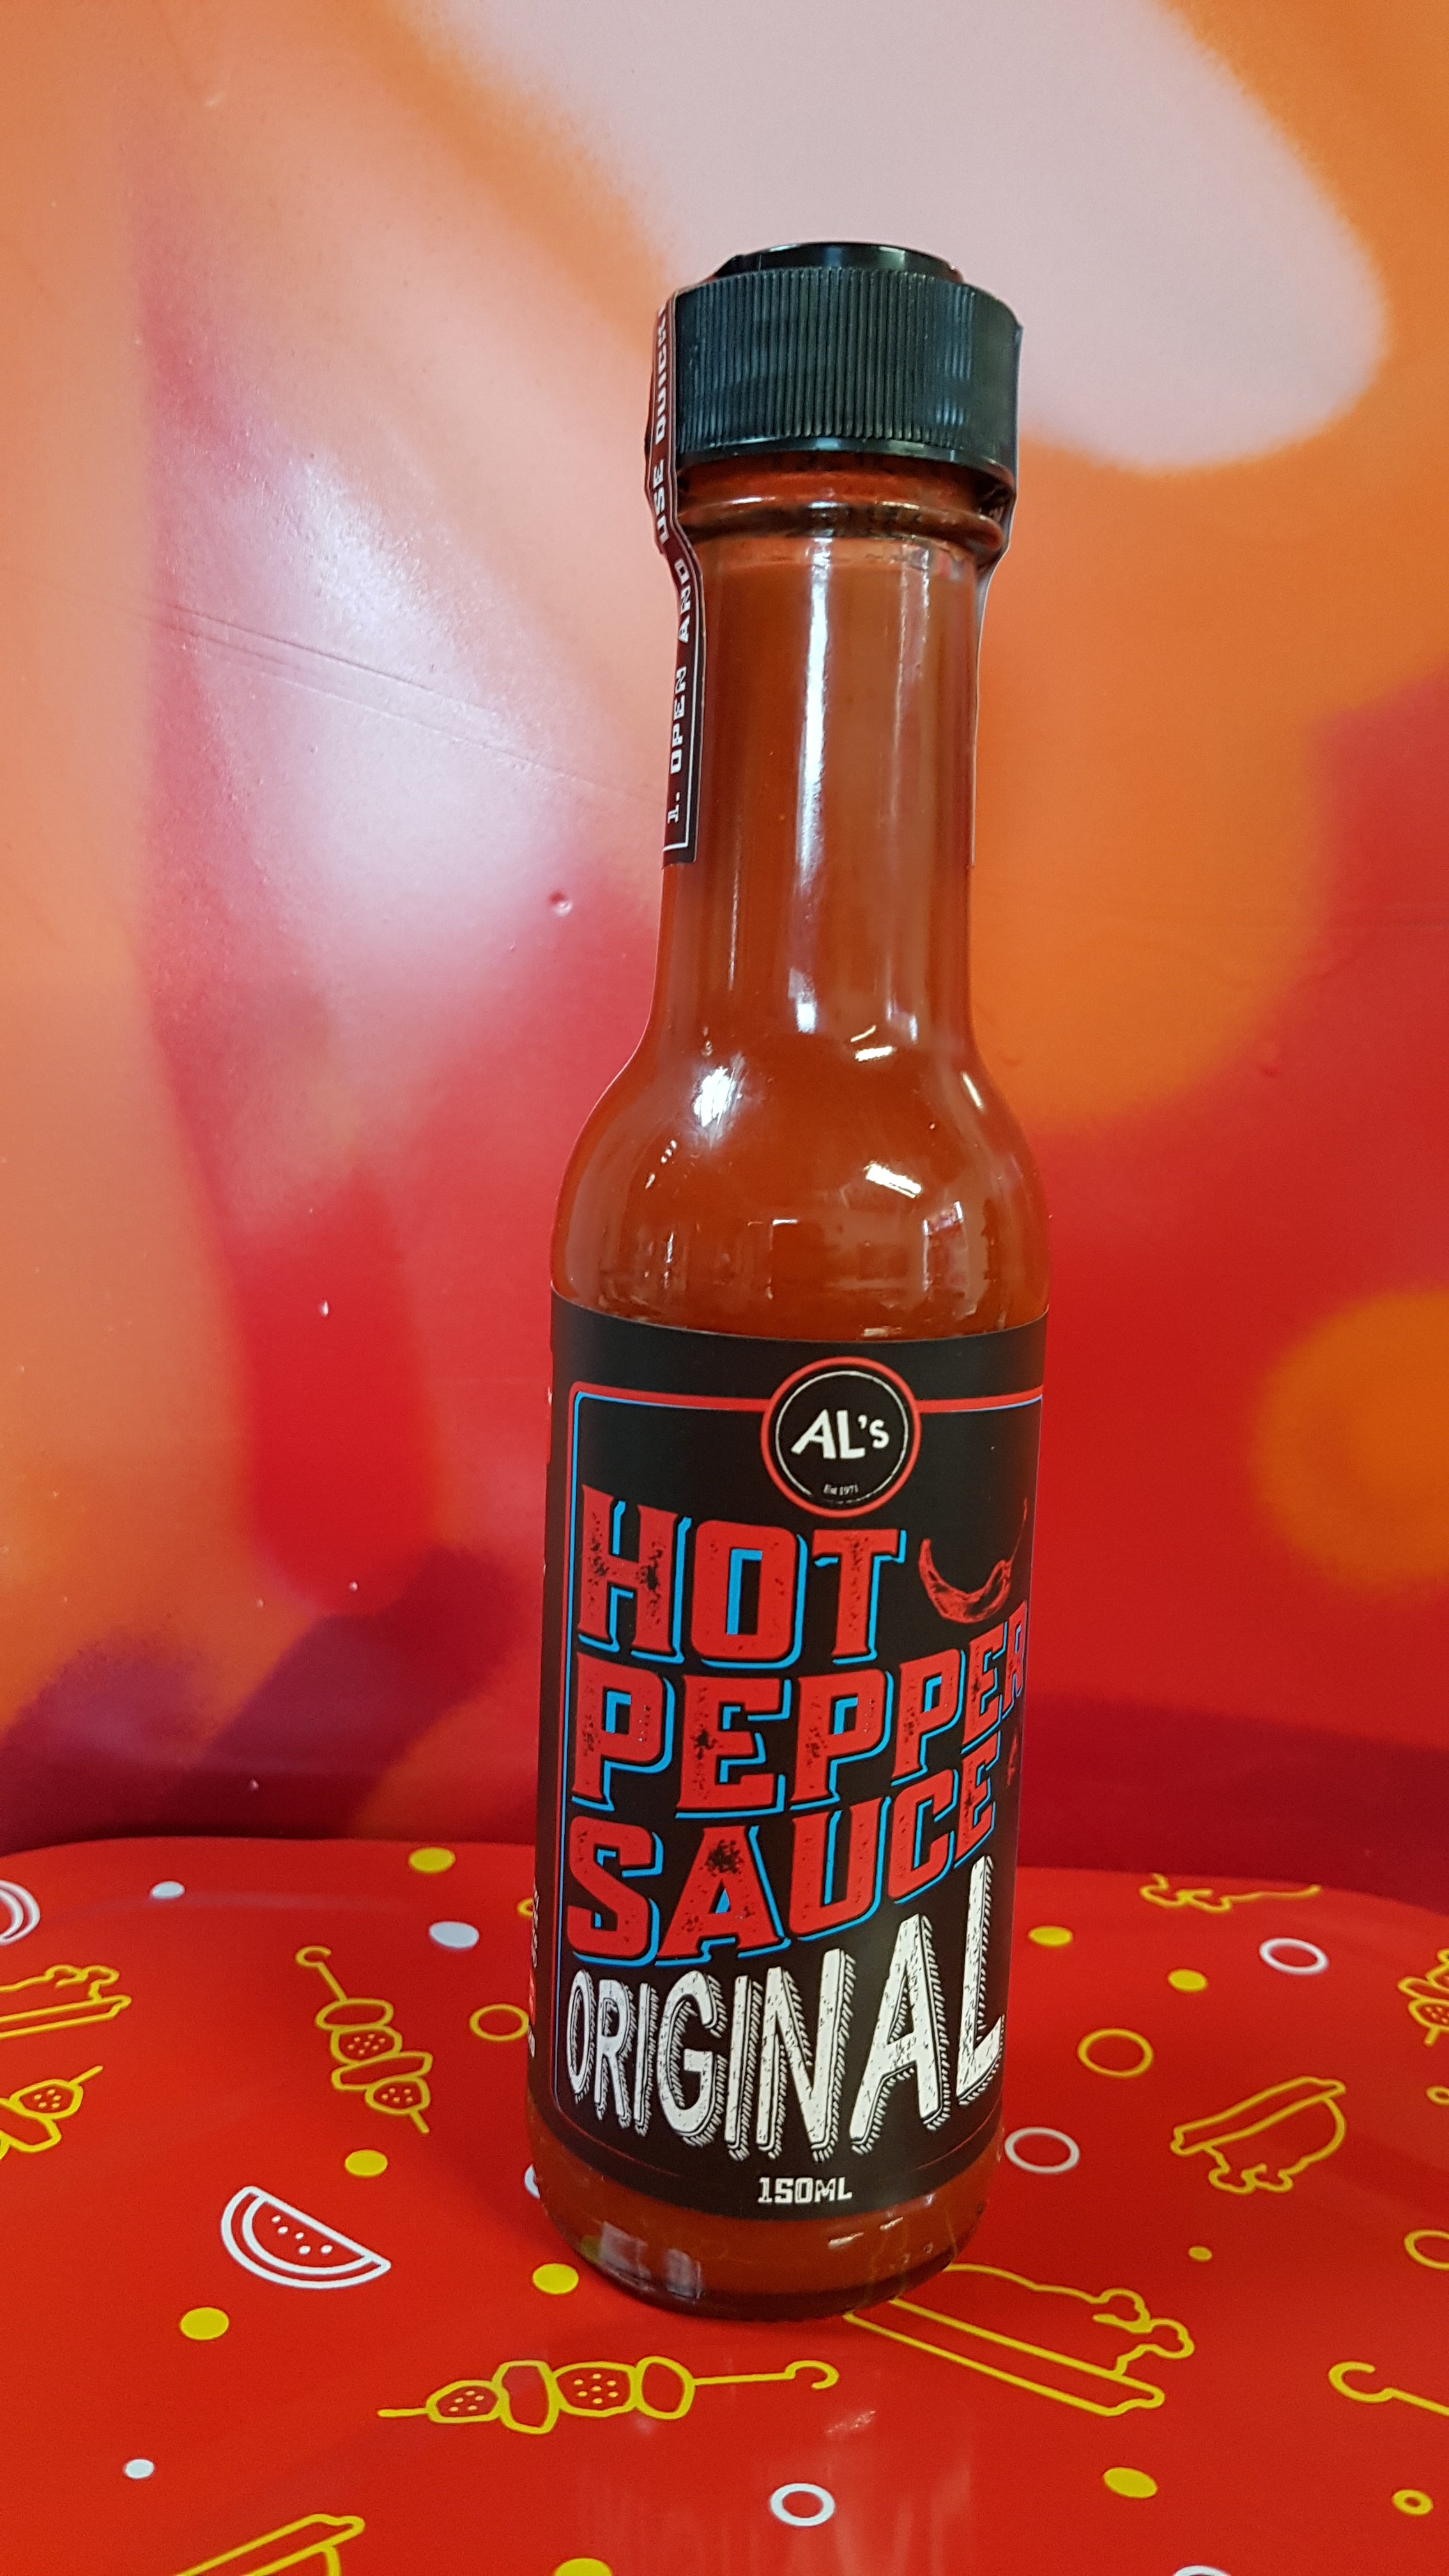 Al's Original Hot Pepper Sauce